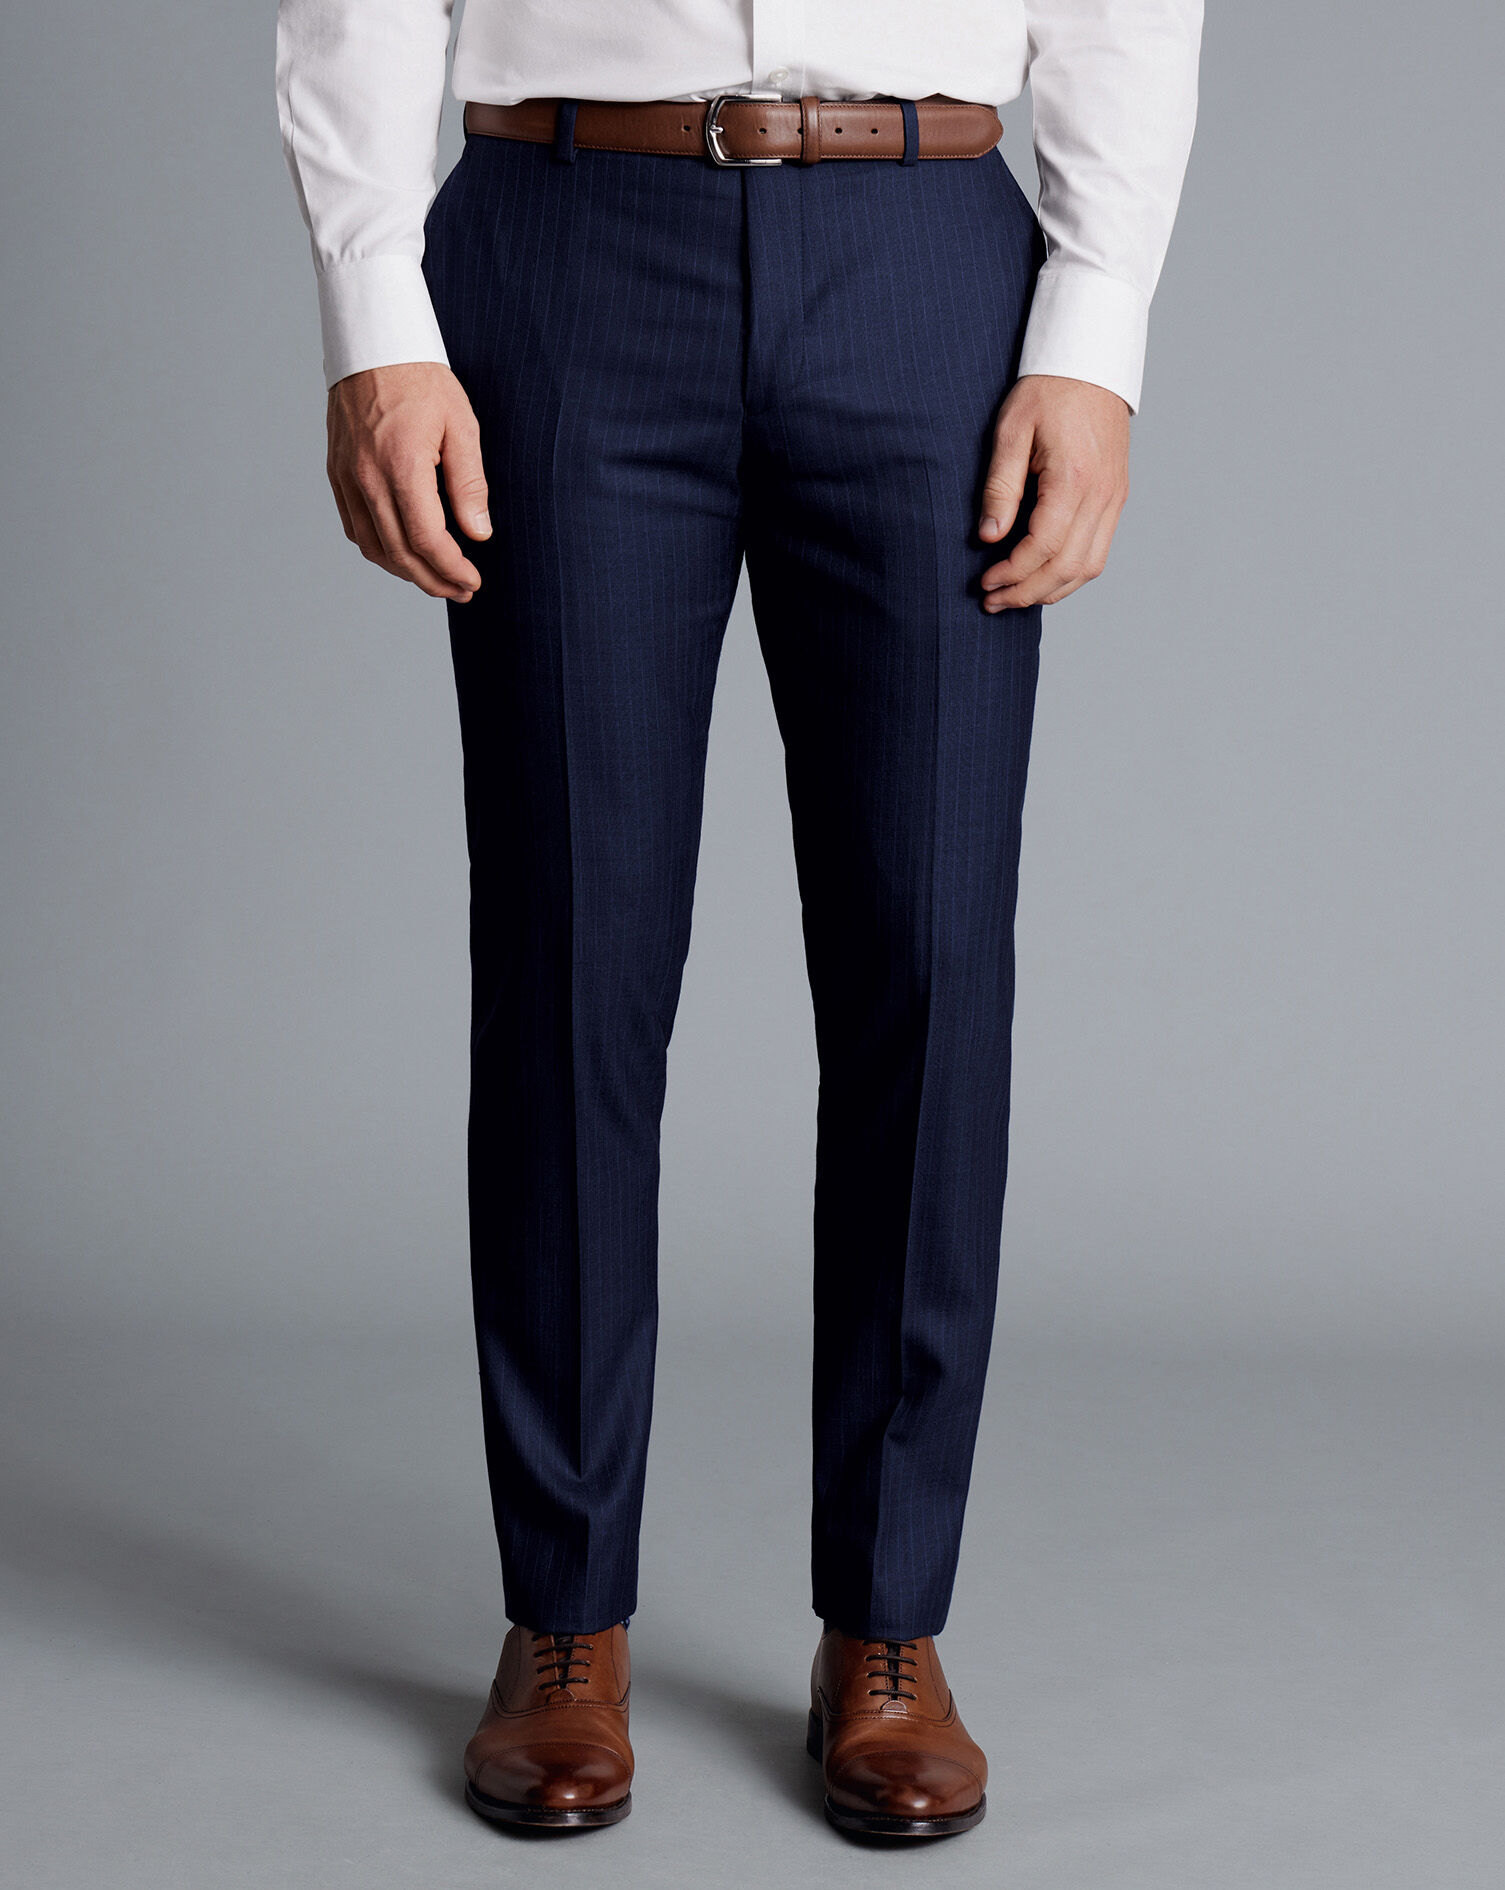 Discover more than 194 blue suit pants